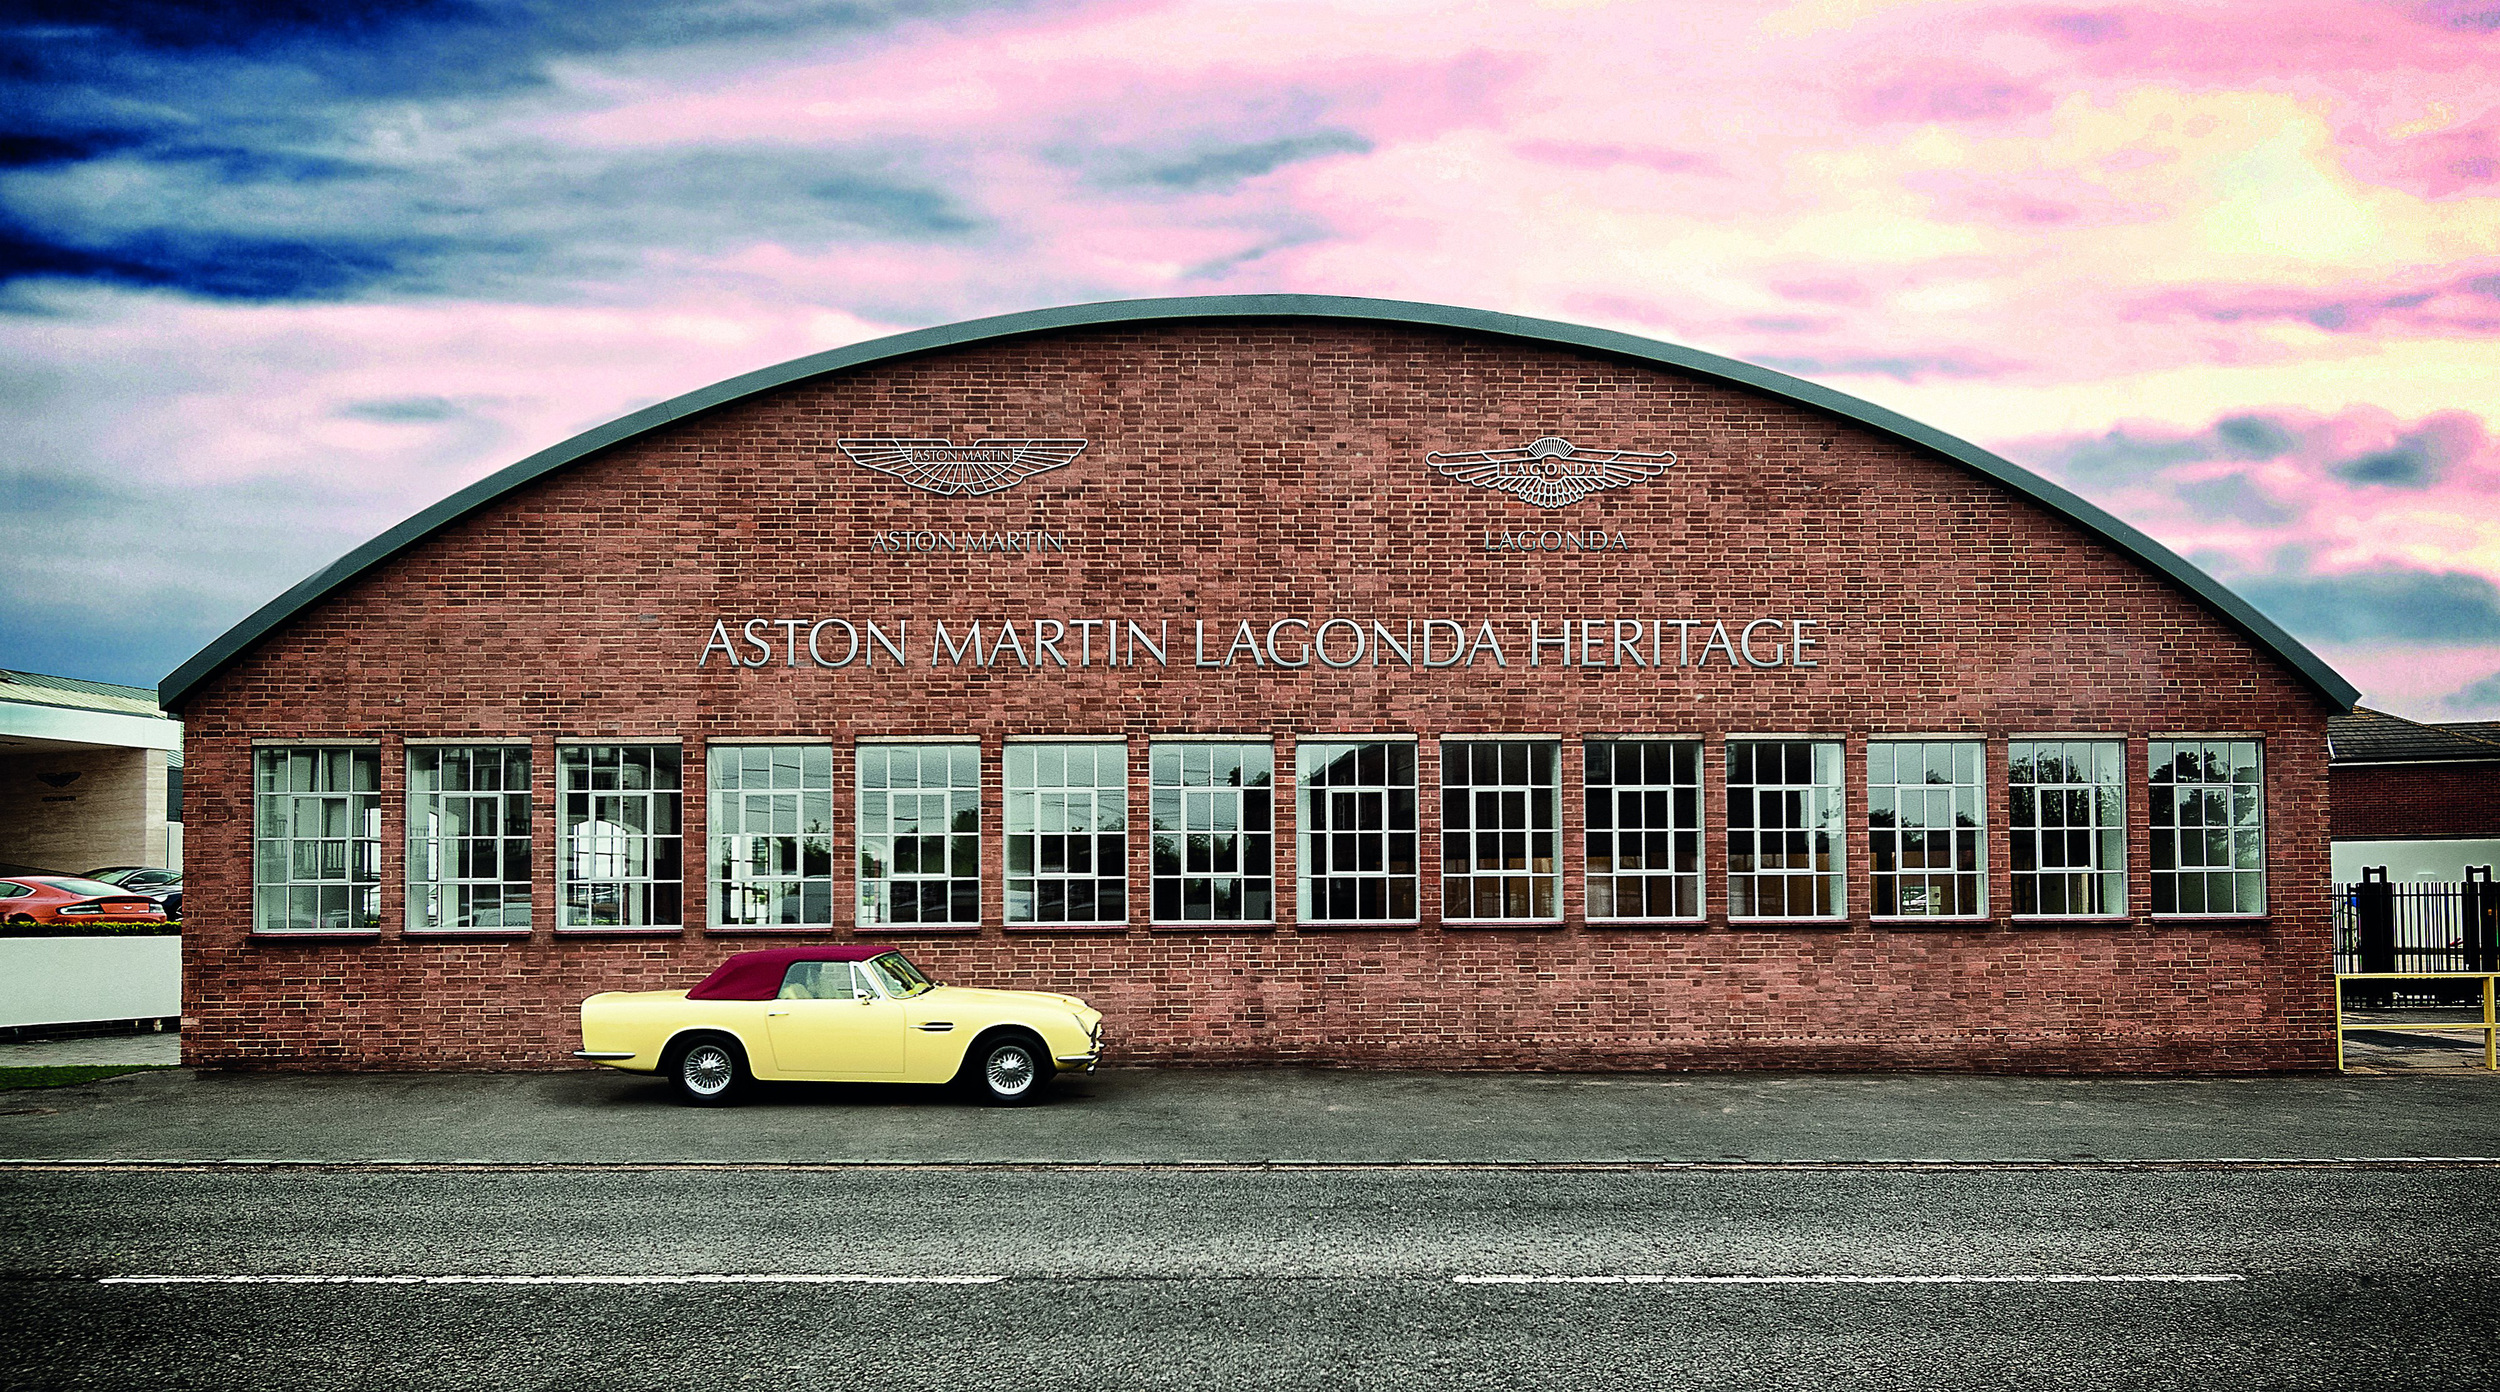 2015 Aston Martin Assured Provenance Program